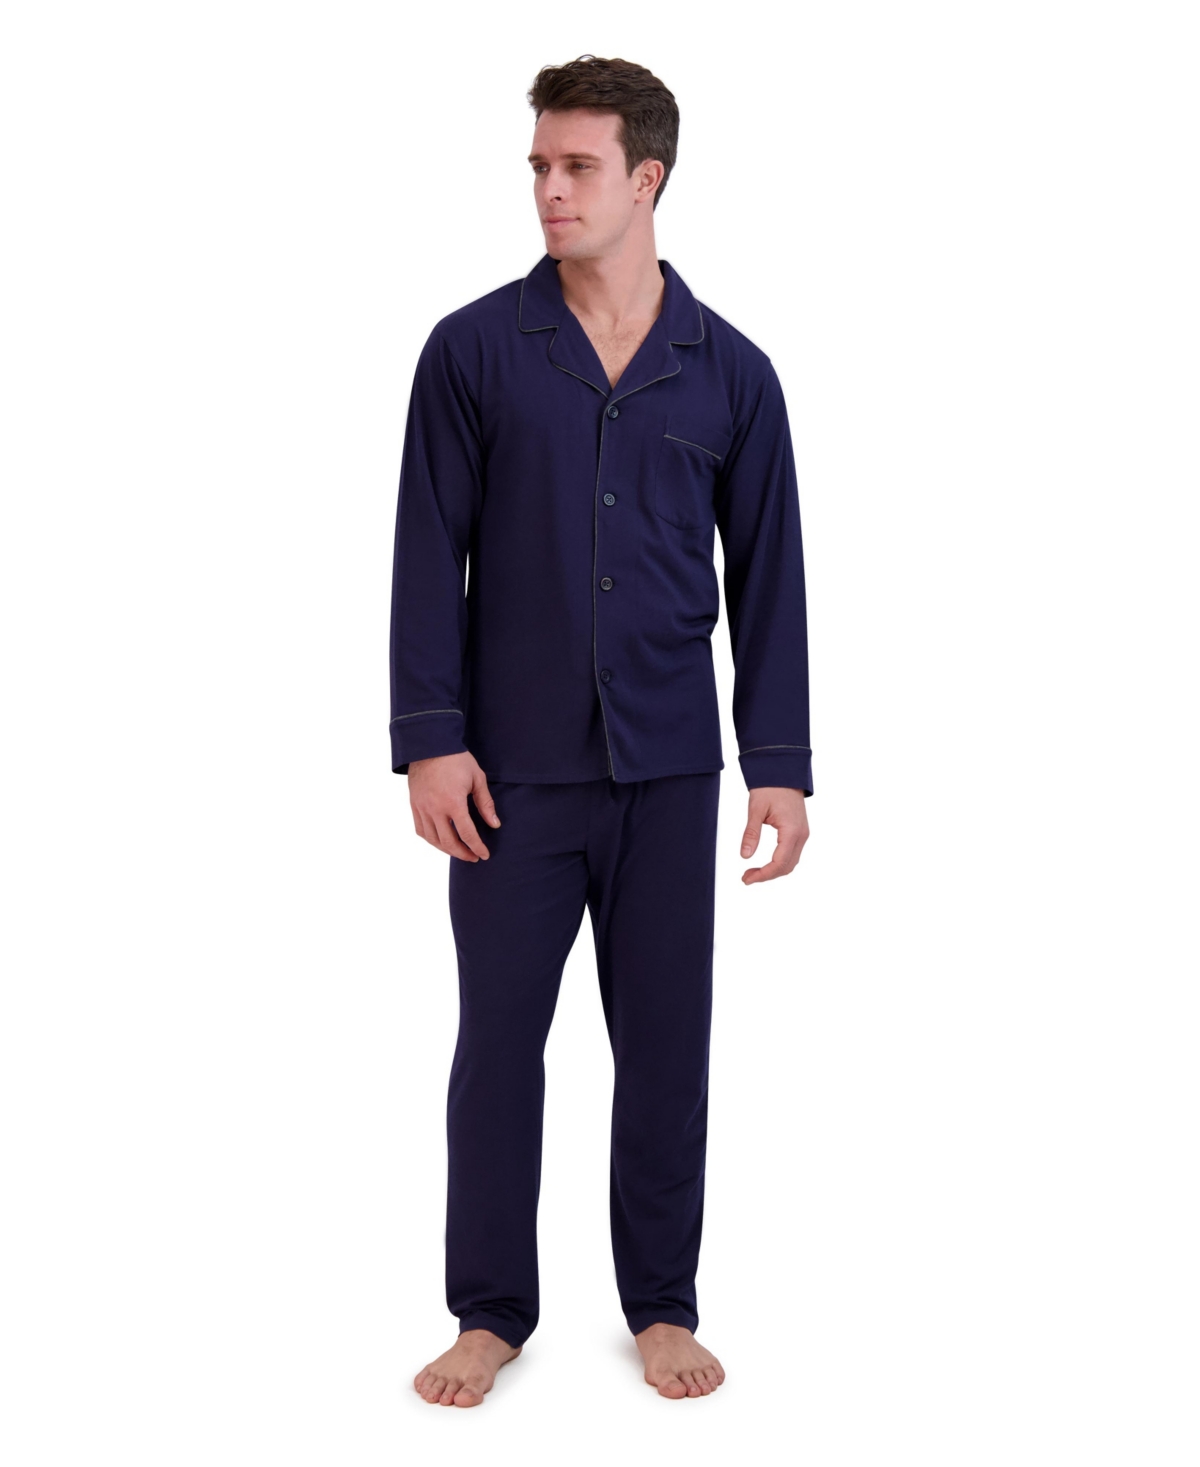 Hanes Men's Cotton Modal Knit Pajama, 2 Piece Set In Navy